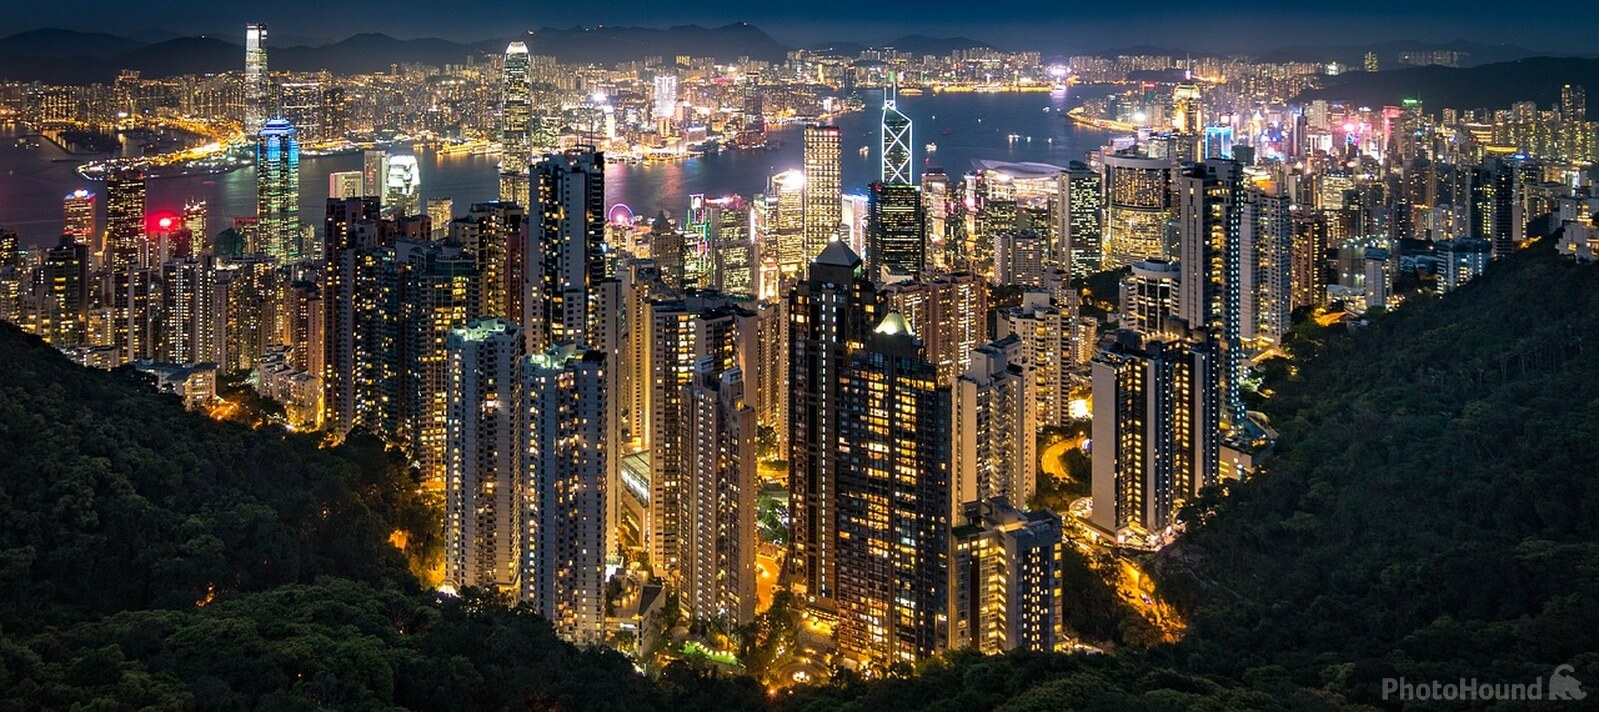 Image of Hong Kong Peak Tower by Team PhotoHound